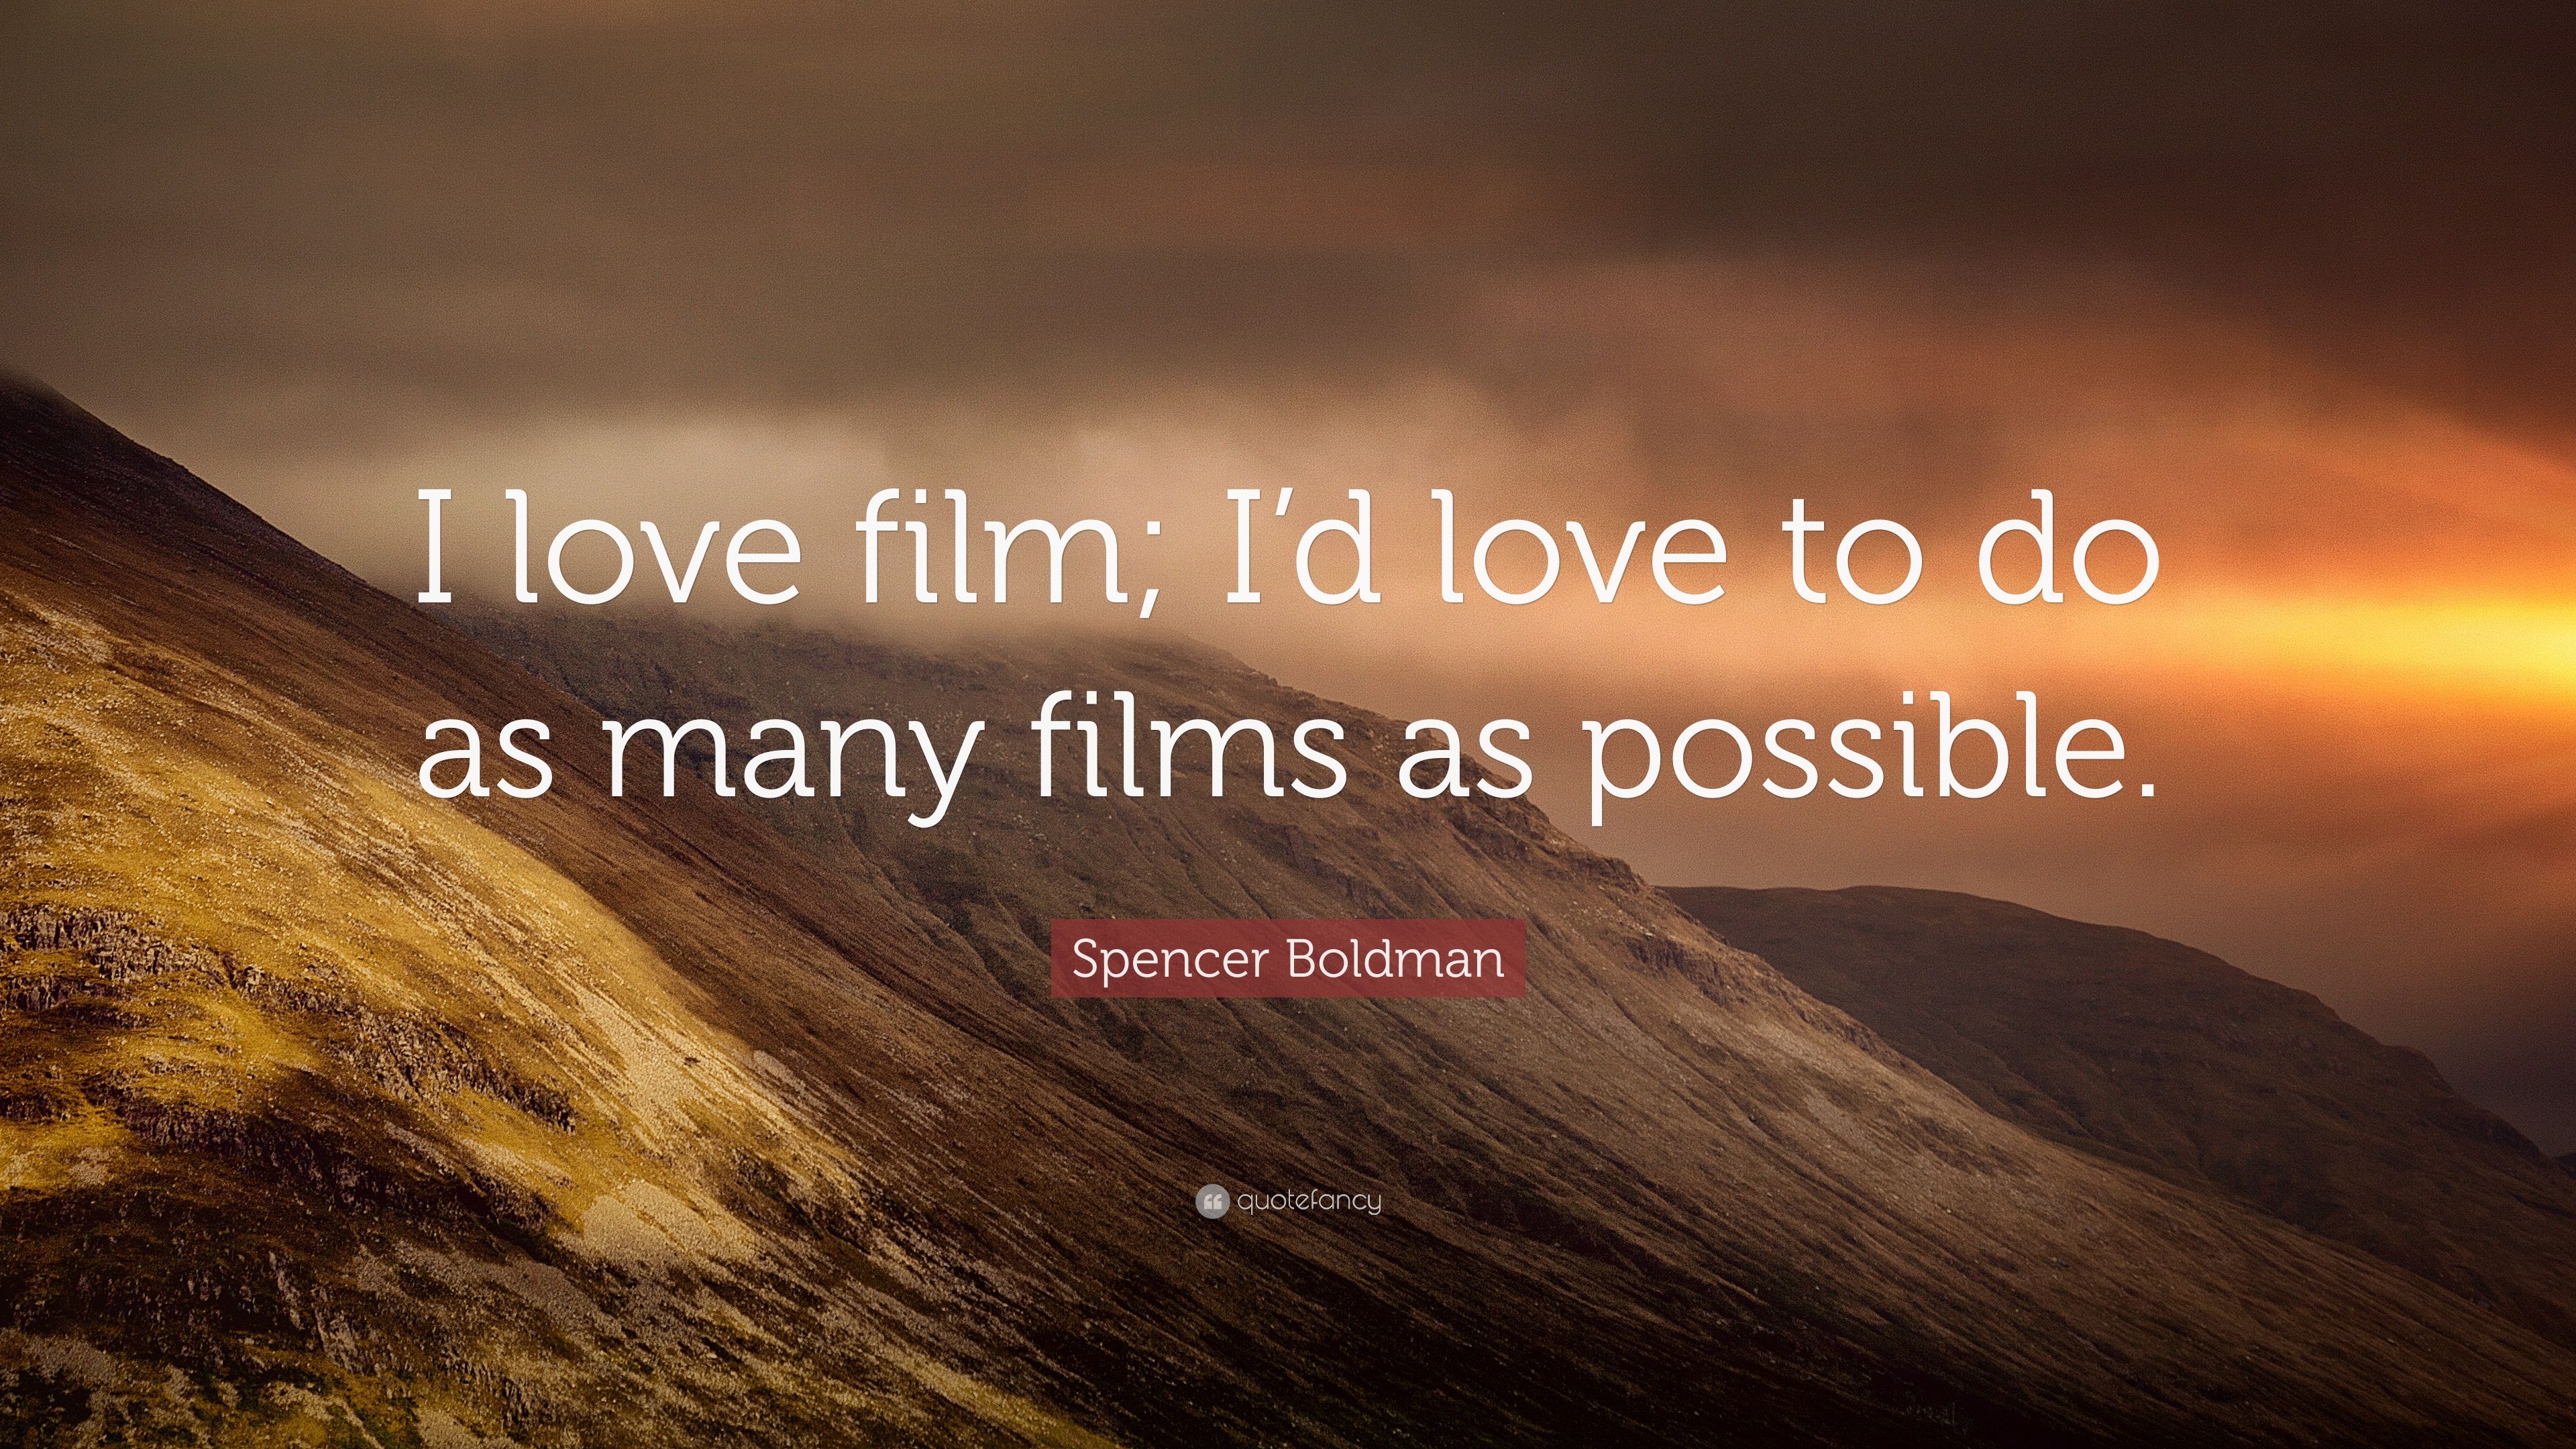 Spencer Boldman Quote: “I love film; I'd love to do as many films as